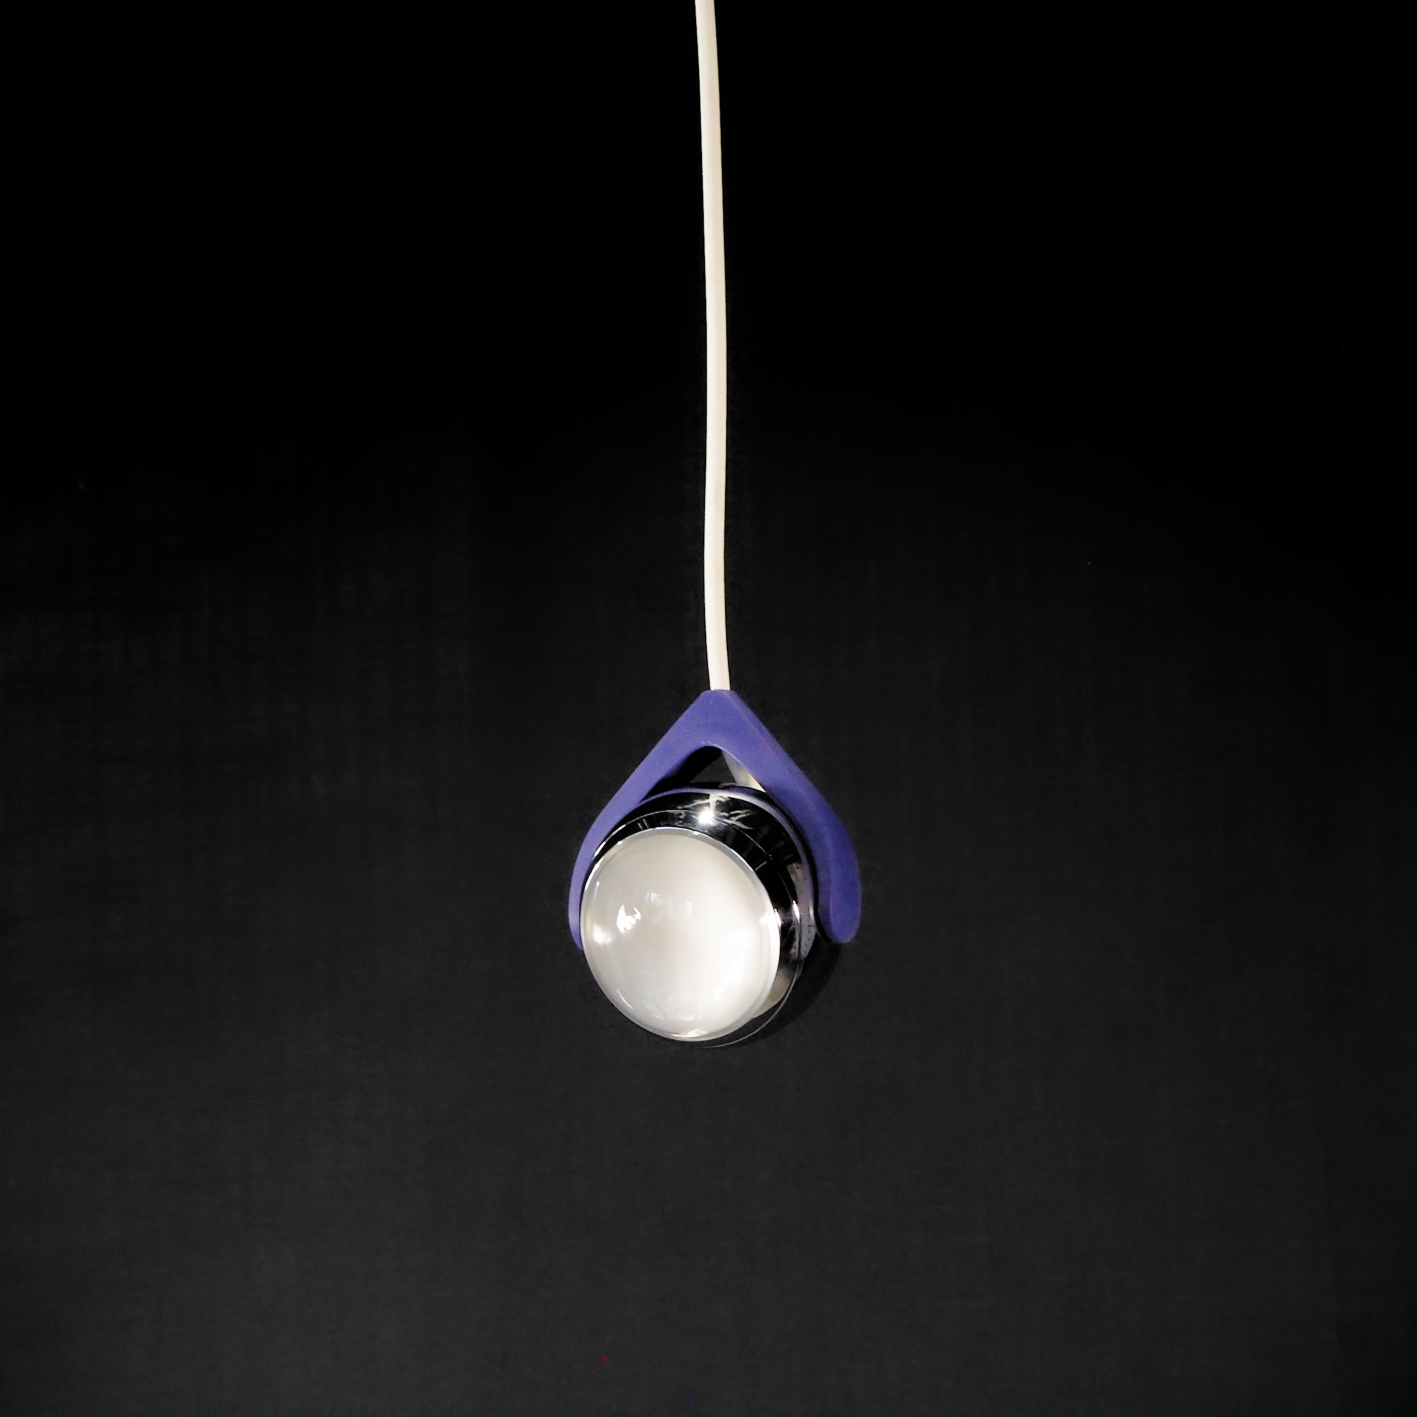 Hanging light 'Falling star' suspension by Tobias Grau